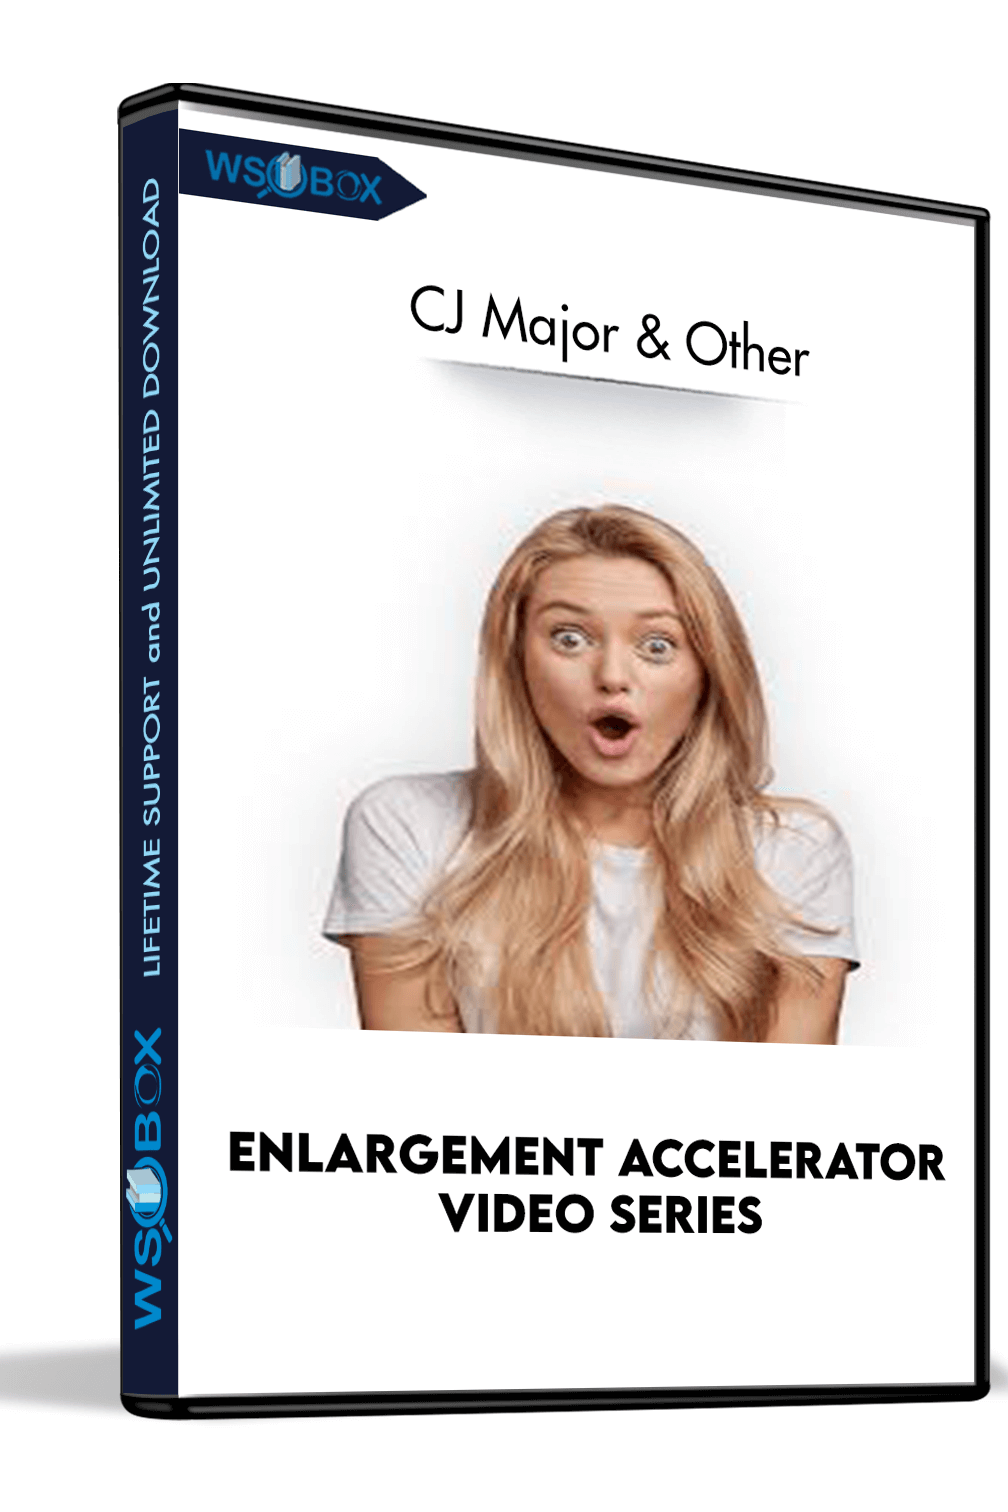 Enlargement Accelerator Video Series – CJ Major & Other